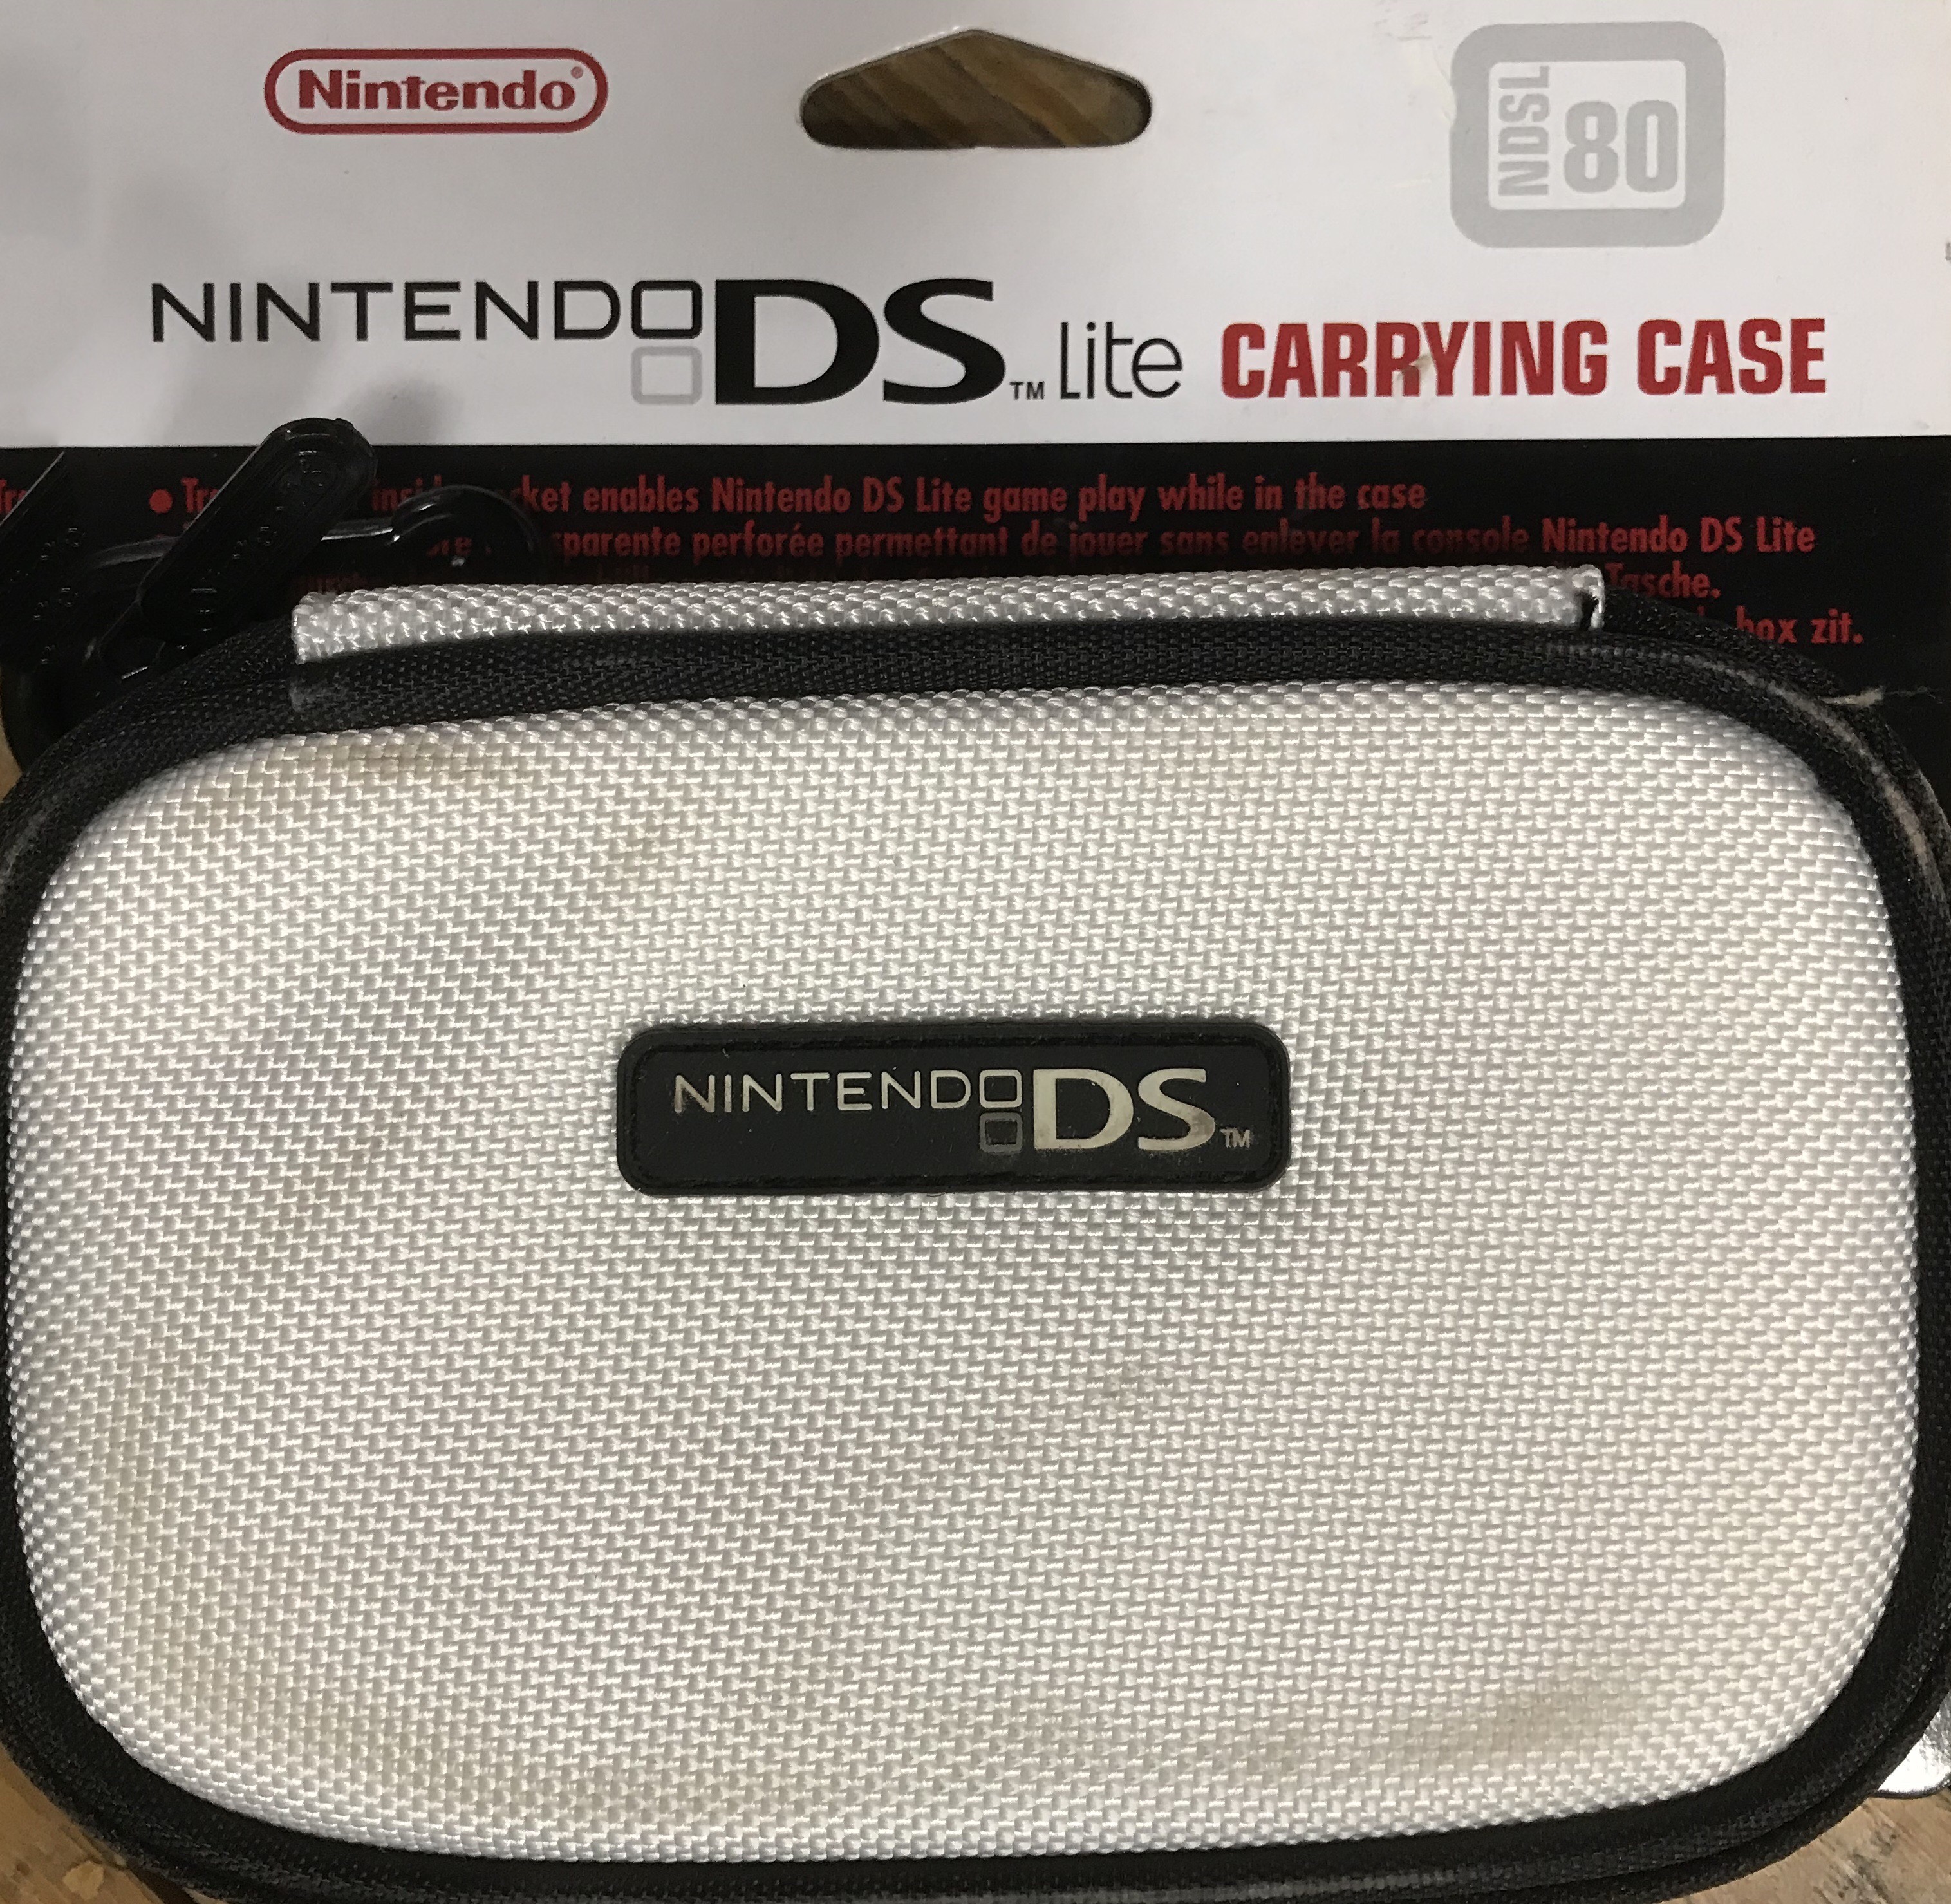 Nintendo DS Light Carrying Case NDSL 80 (Fehér) - Nintendo DS Kiegészítők